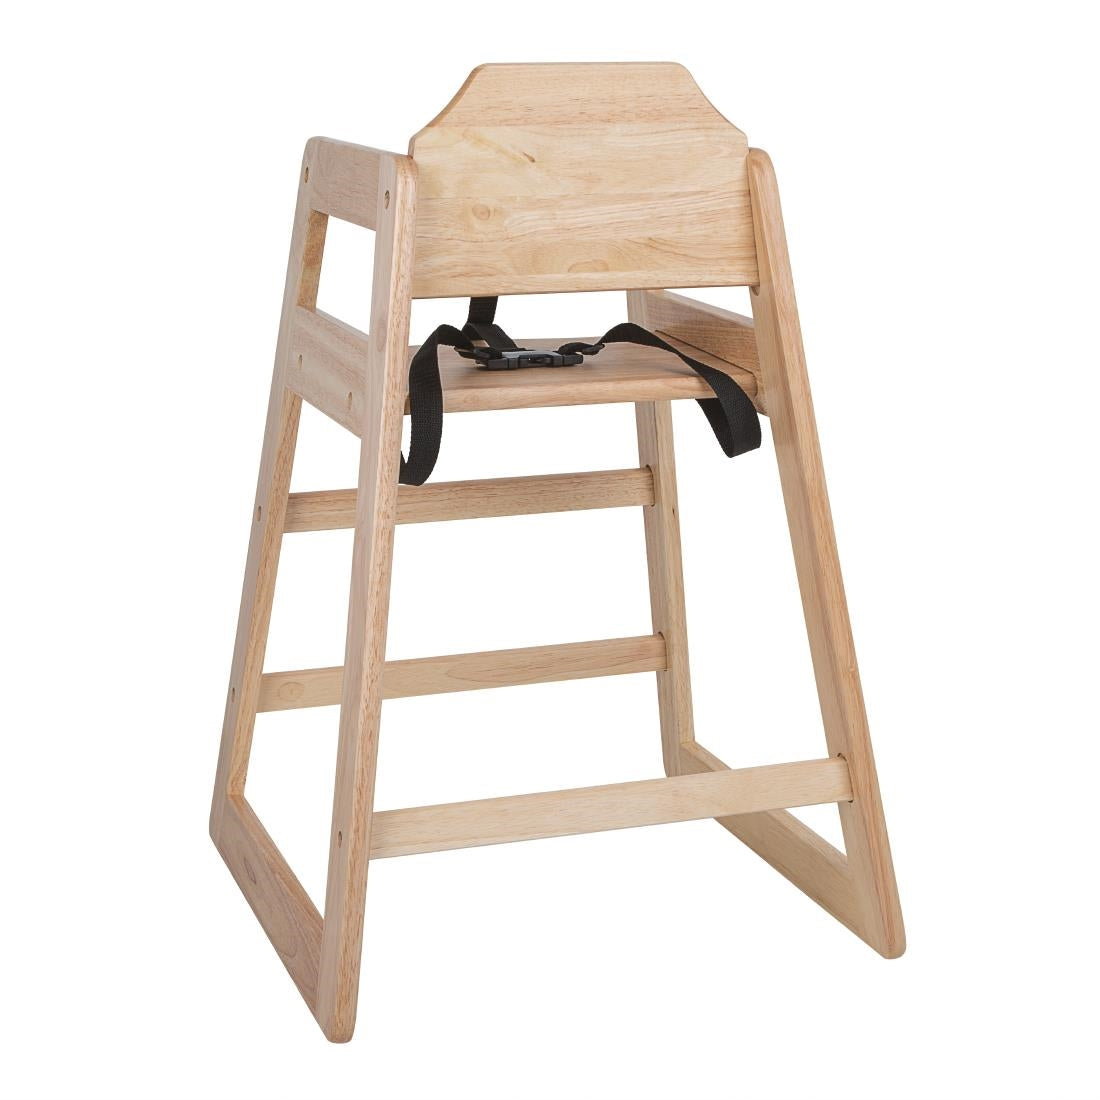 Bolero Wooden Highchair JD Catering Equipment Solutions Ltd